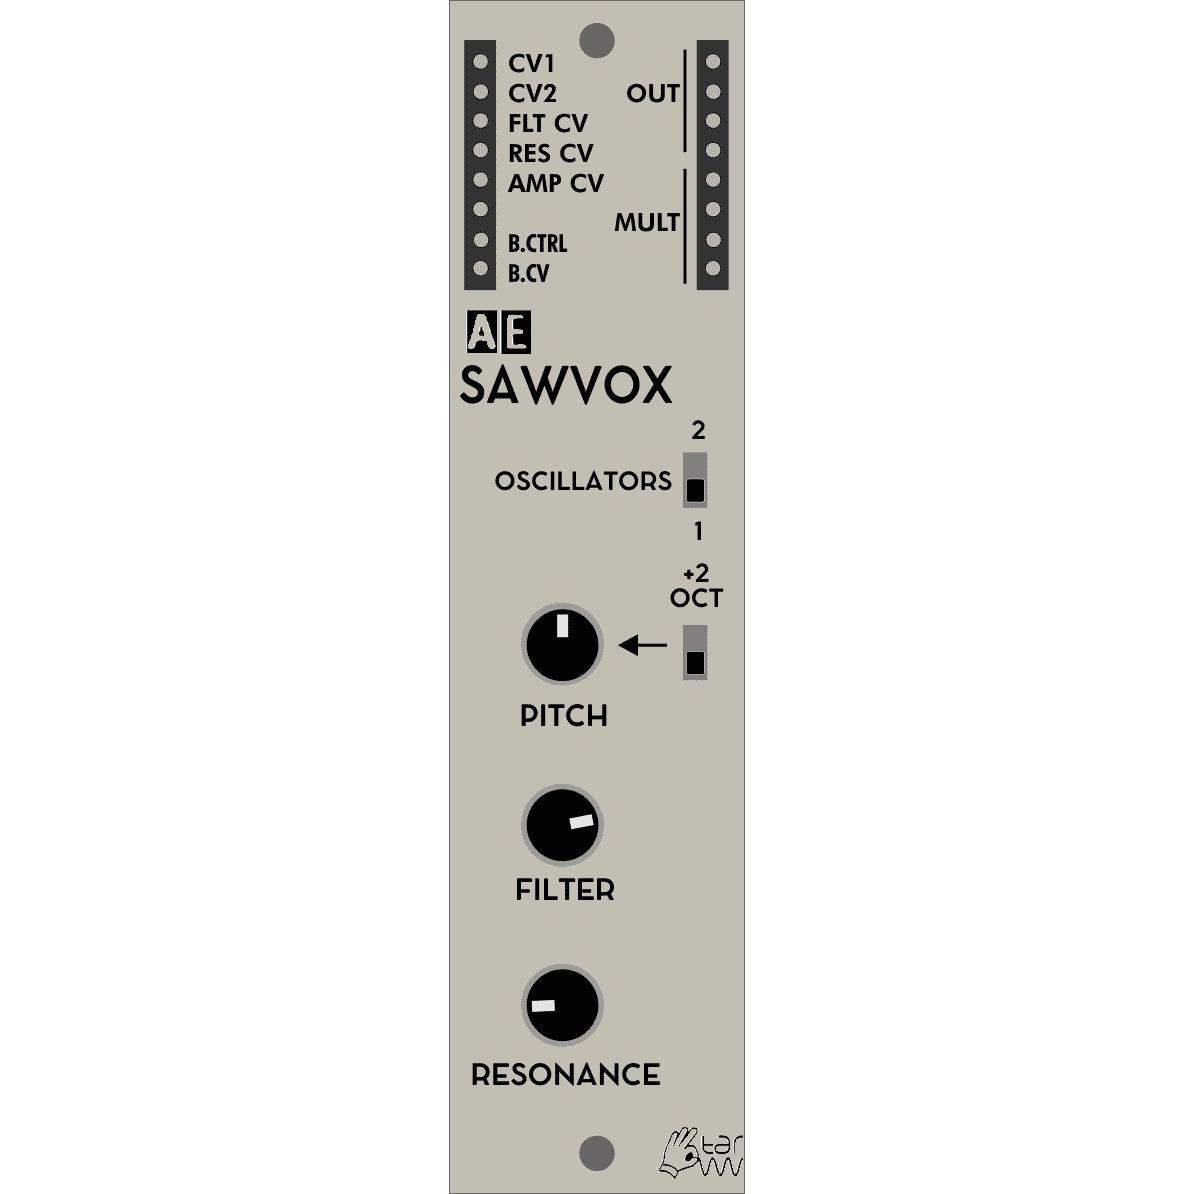 SAWVOX Module a Nasty 8 Bit Synth Voice for AE Modular